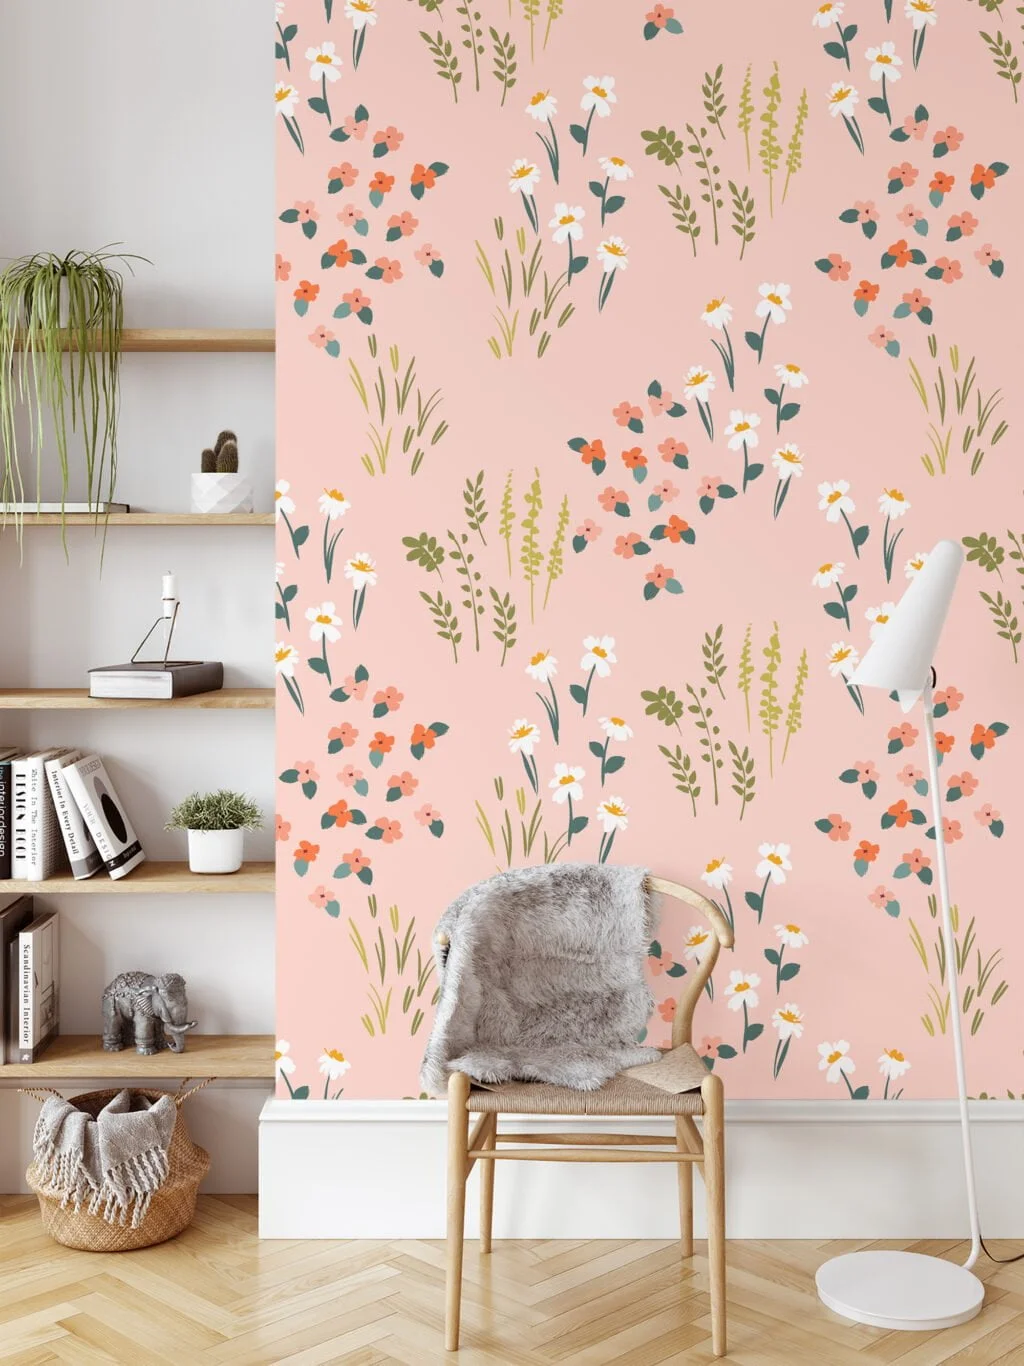 Pastel Peach Pink Flat Art Flowers Illustration Wallpaper, Delicate Wildflowers Peel & Stick Wall Mural